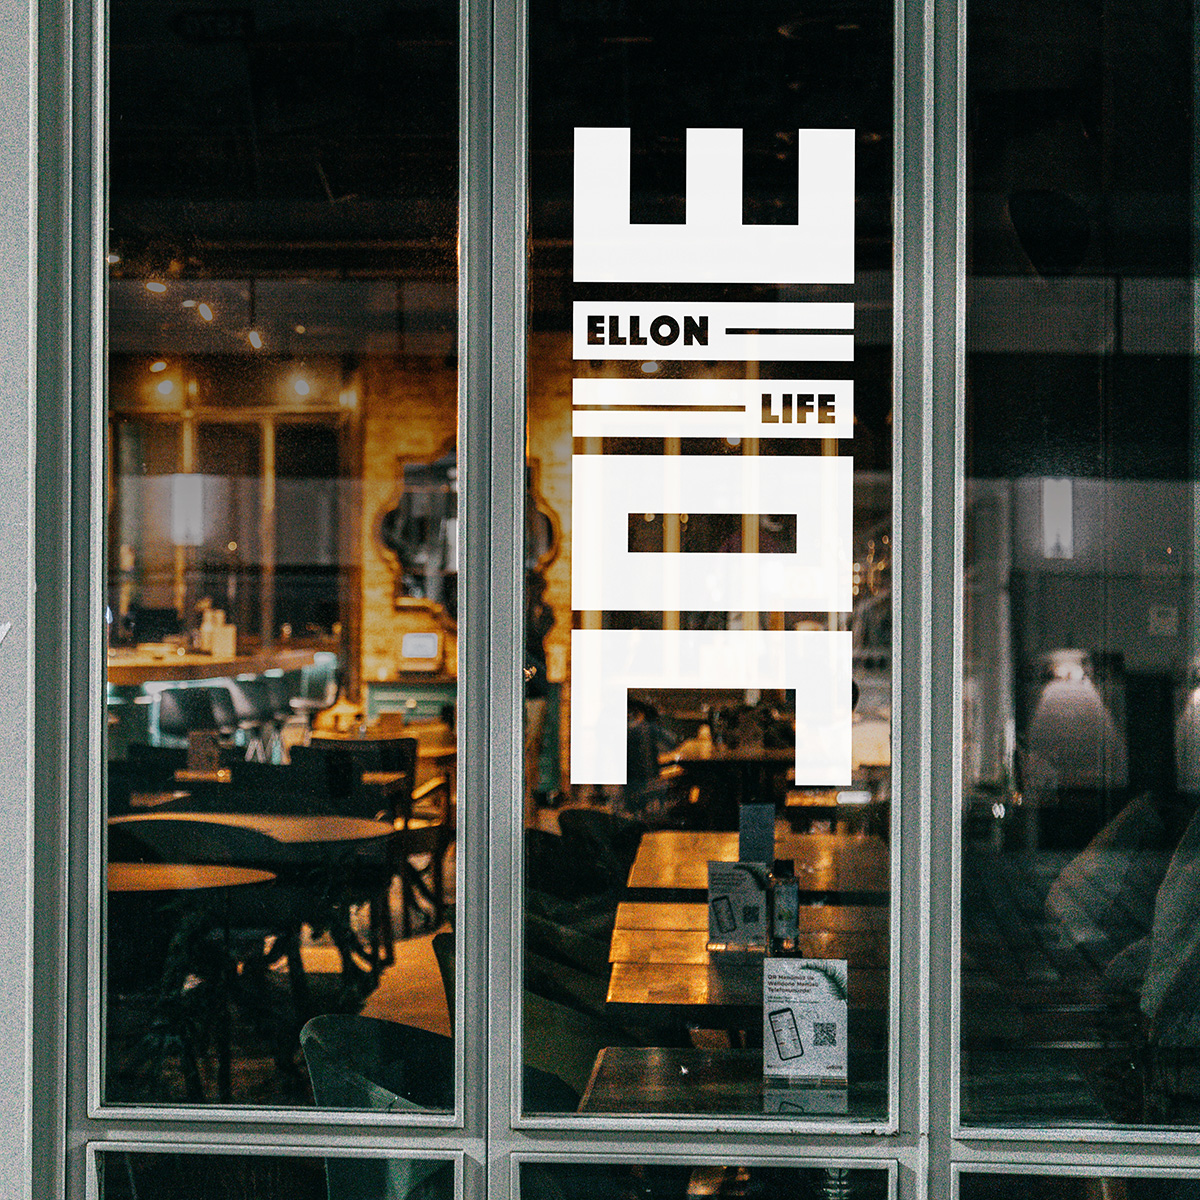 Ellon Life Brand stuck on a cafe window providing insight into Ellon Life